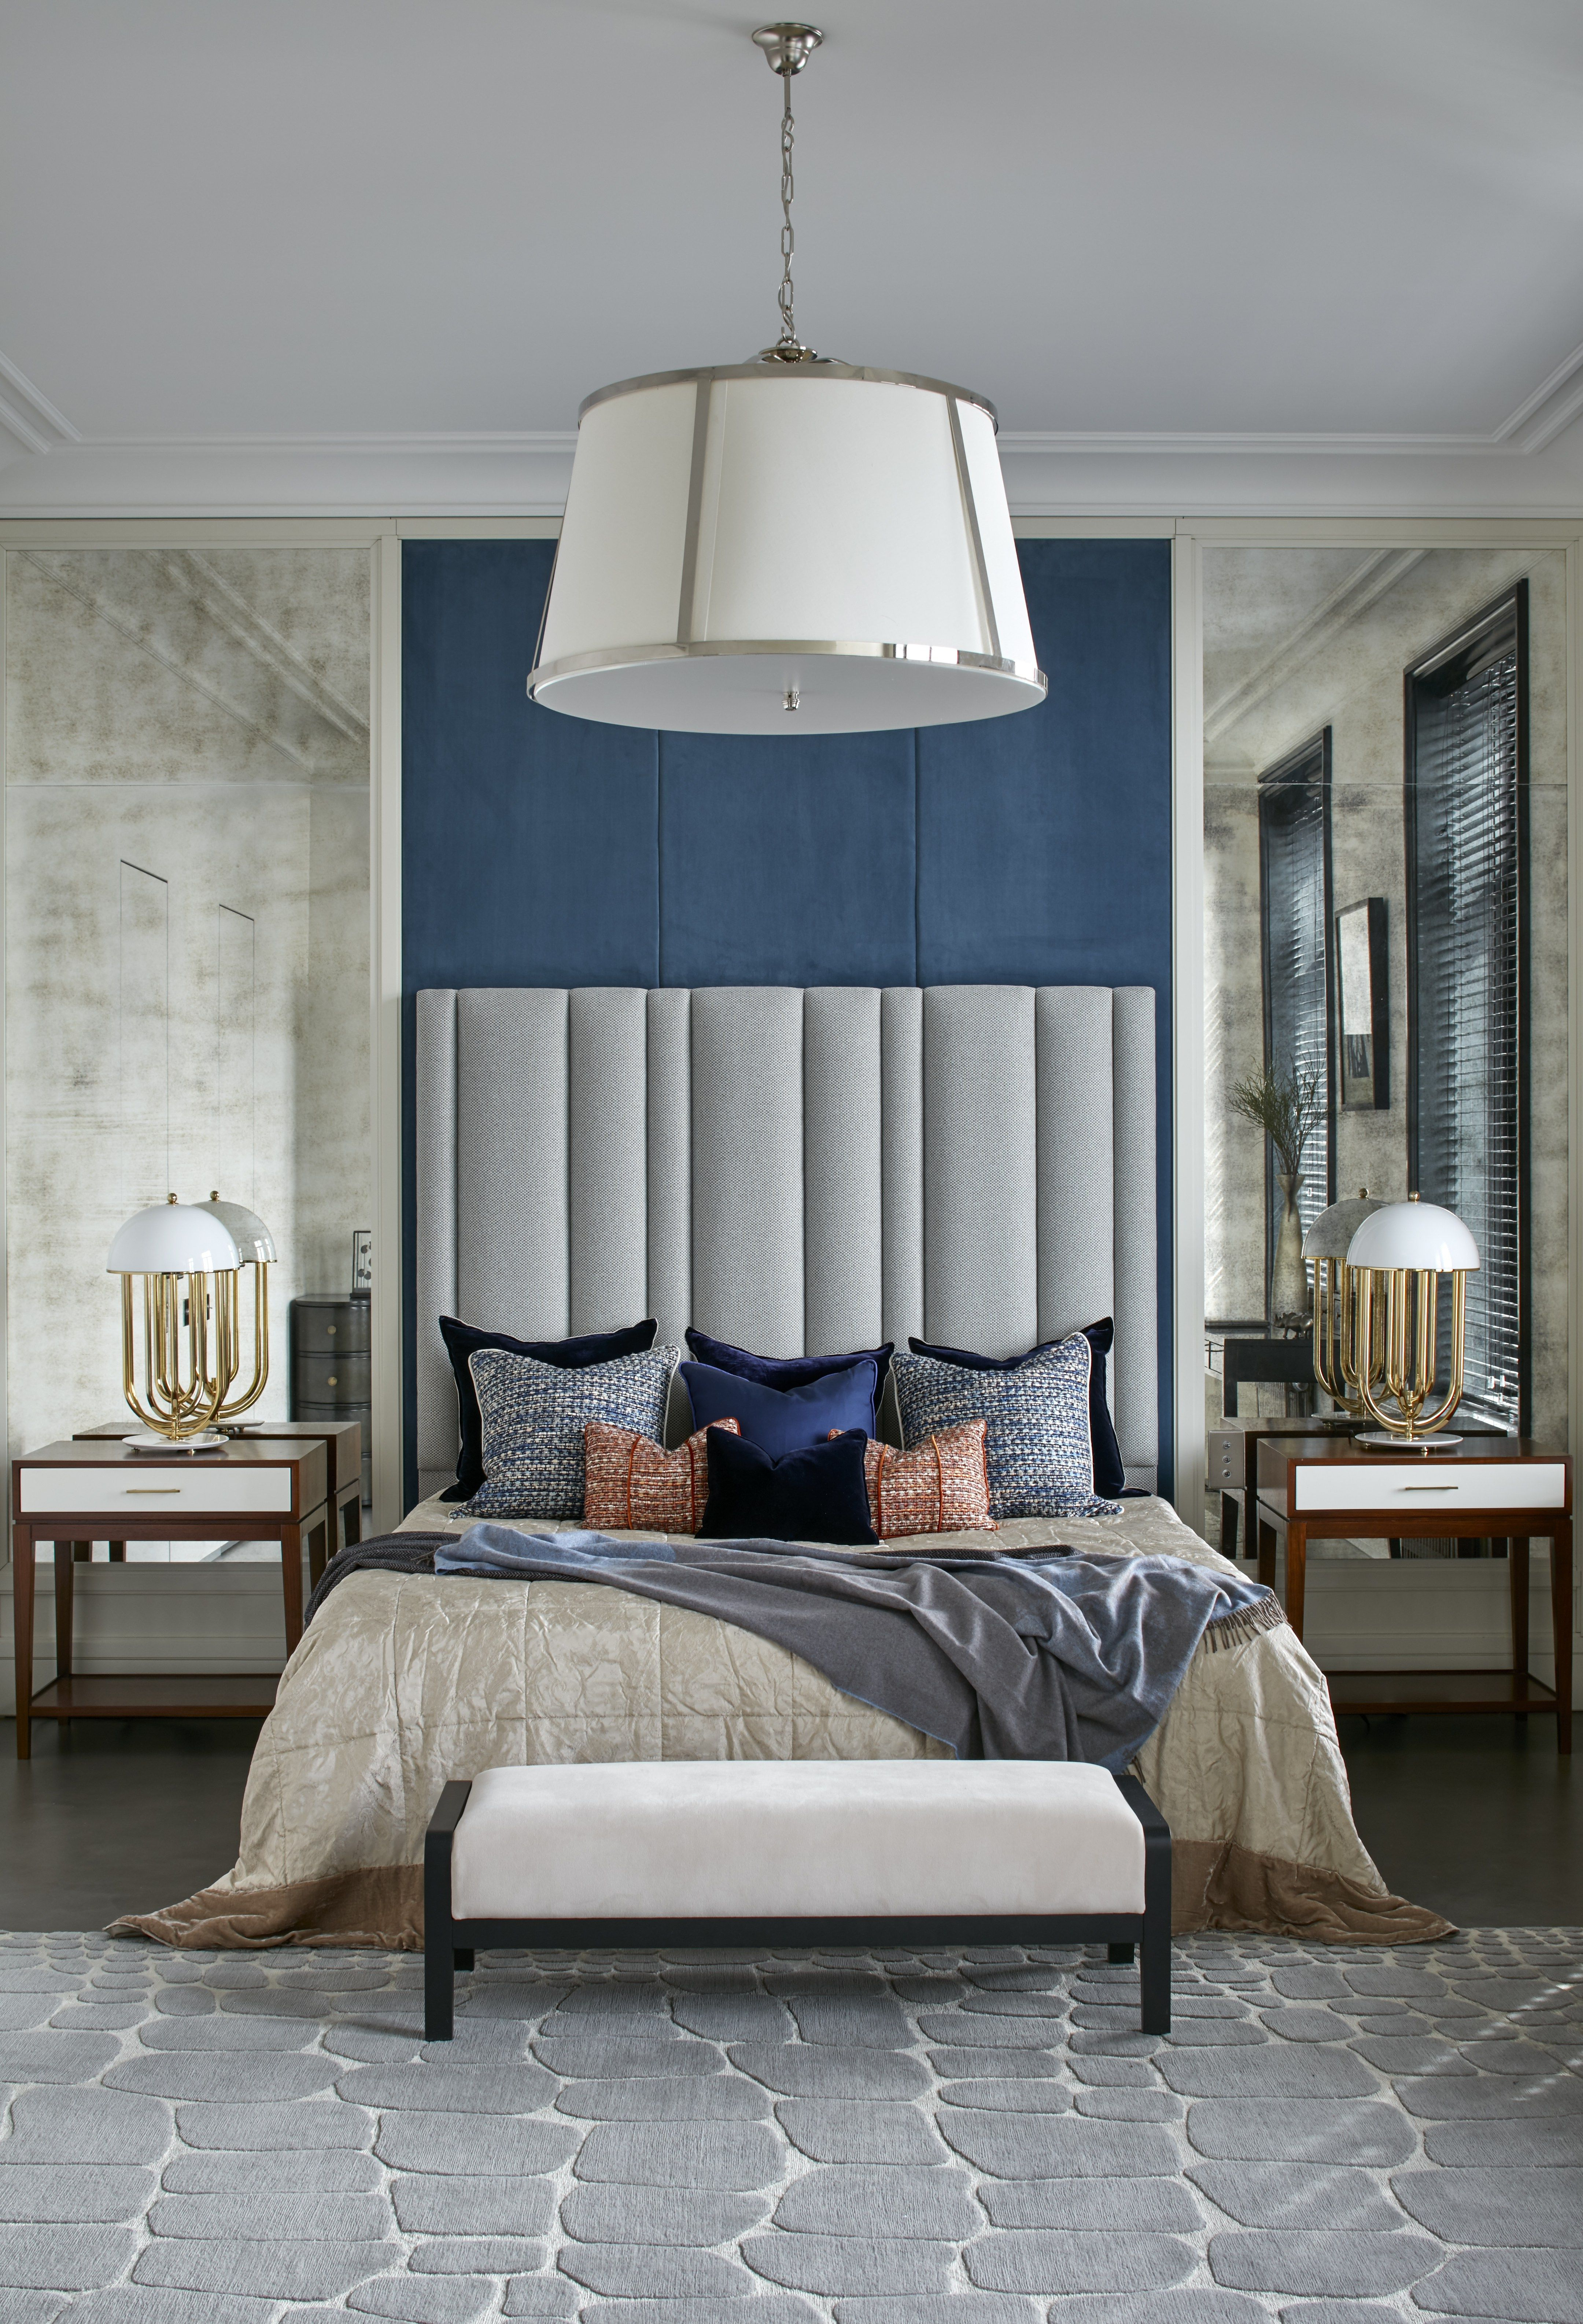 Top Designers Share Their Master Bedroom Interior Design